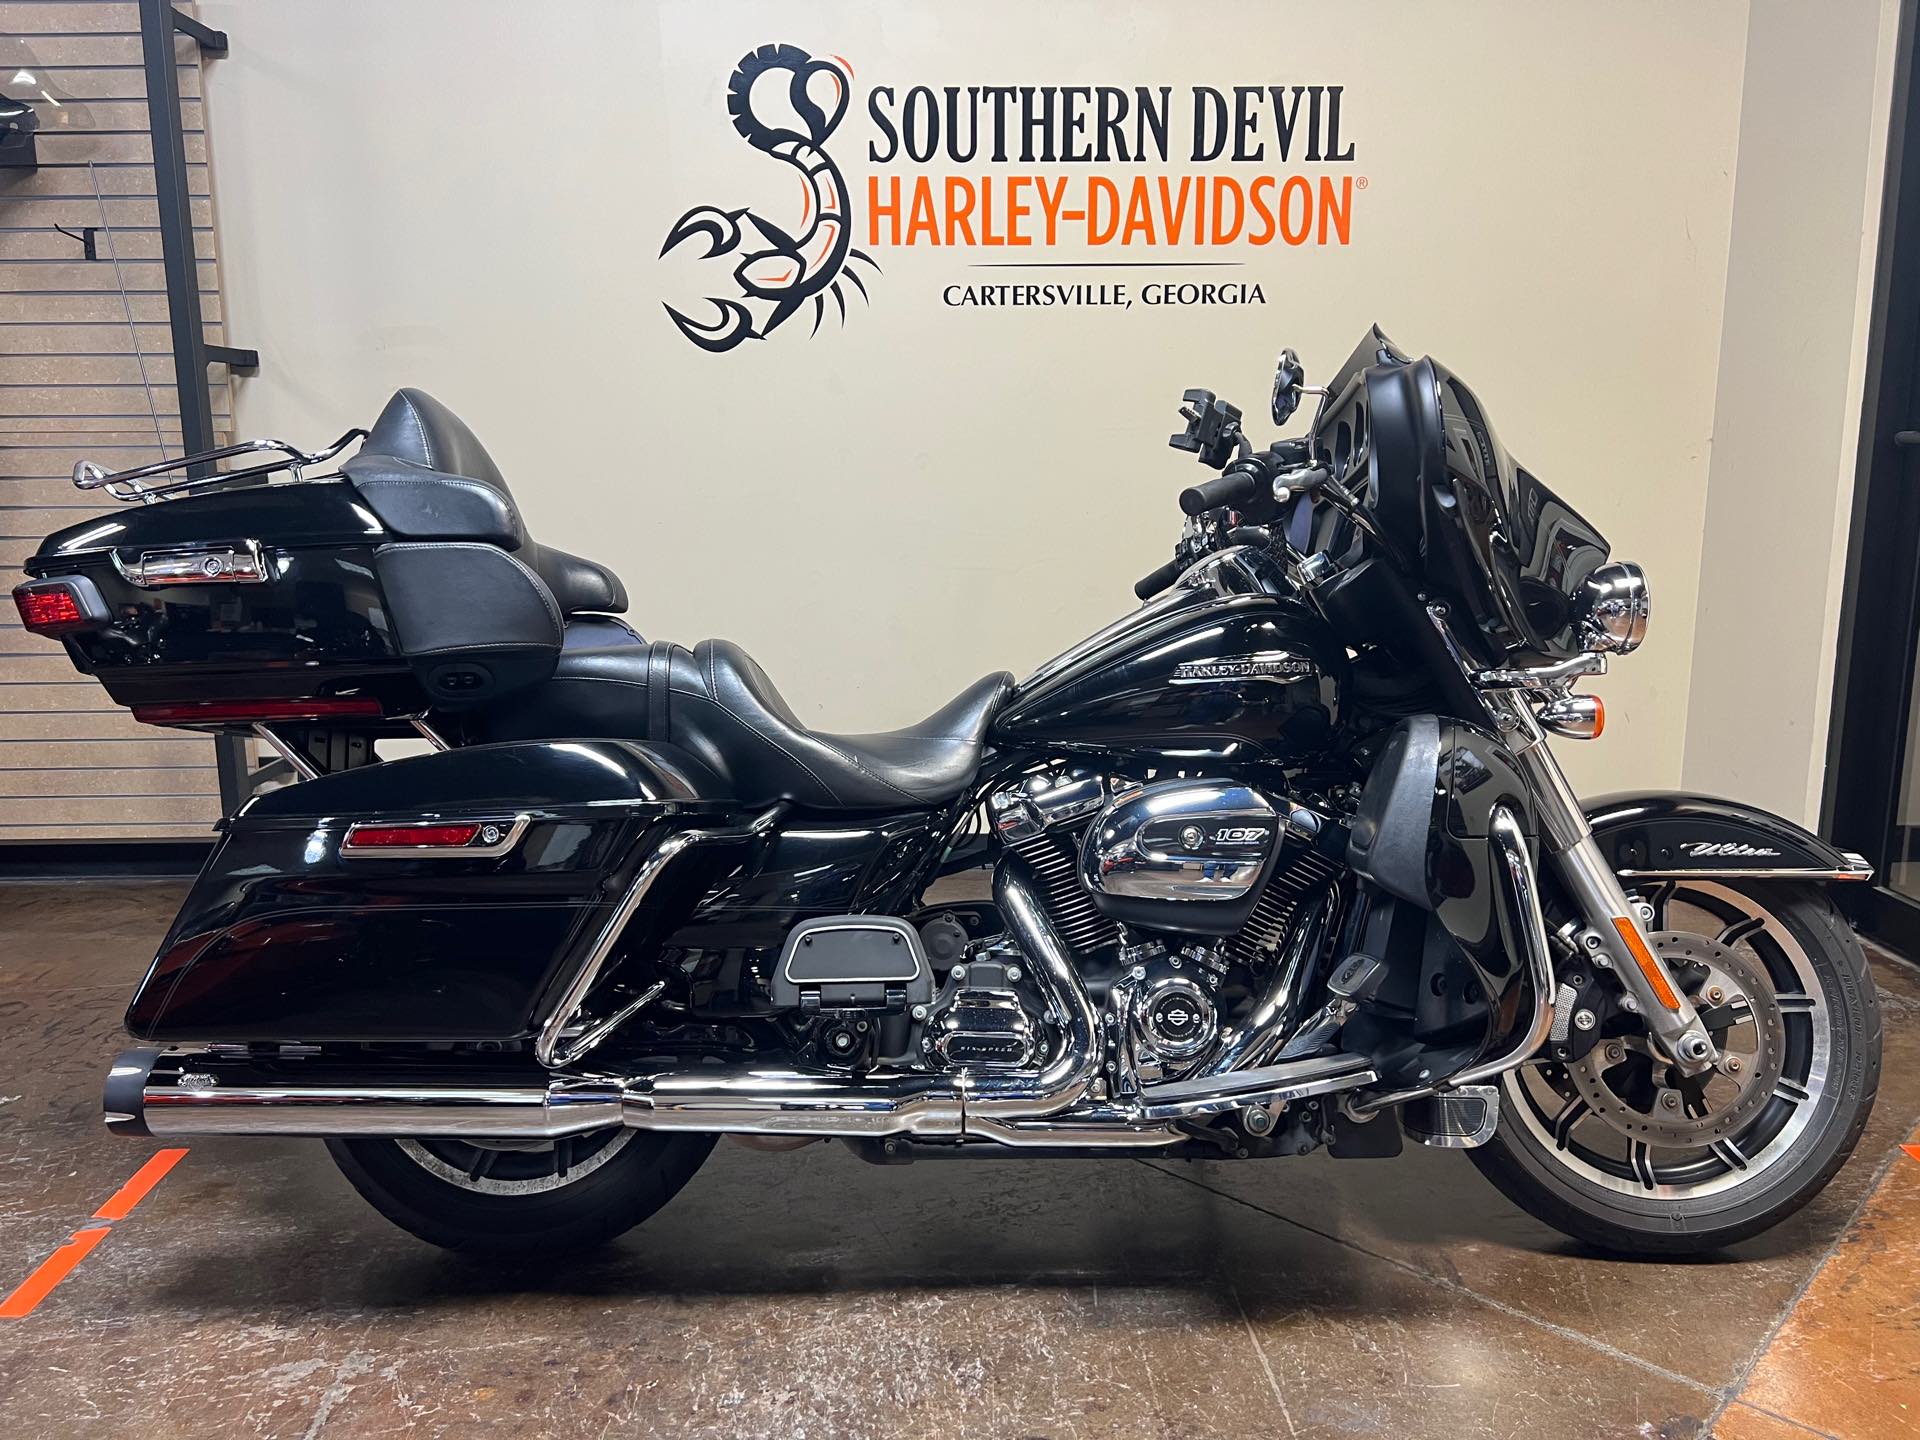 2019 Harley-Davidson Electra Glide Ultra Classic at Southern Devil Harley-Davidson